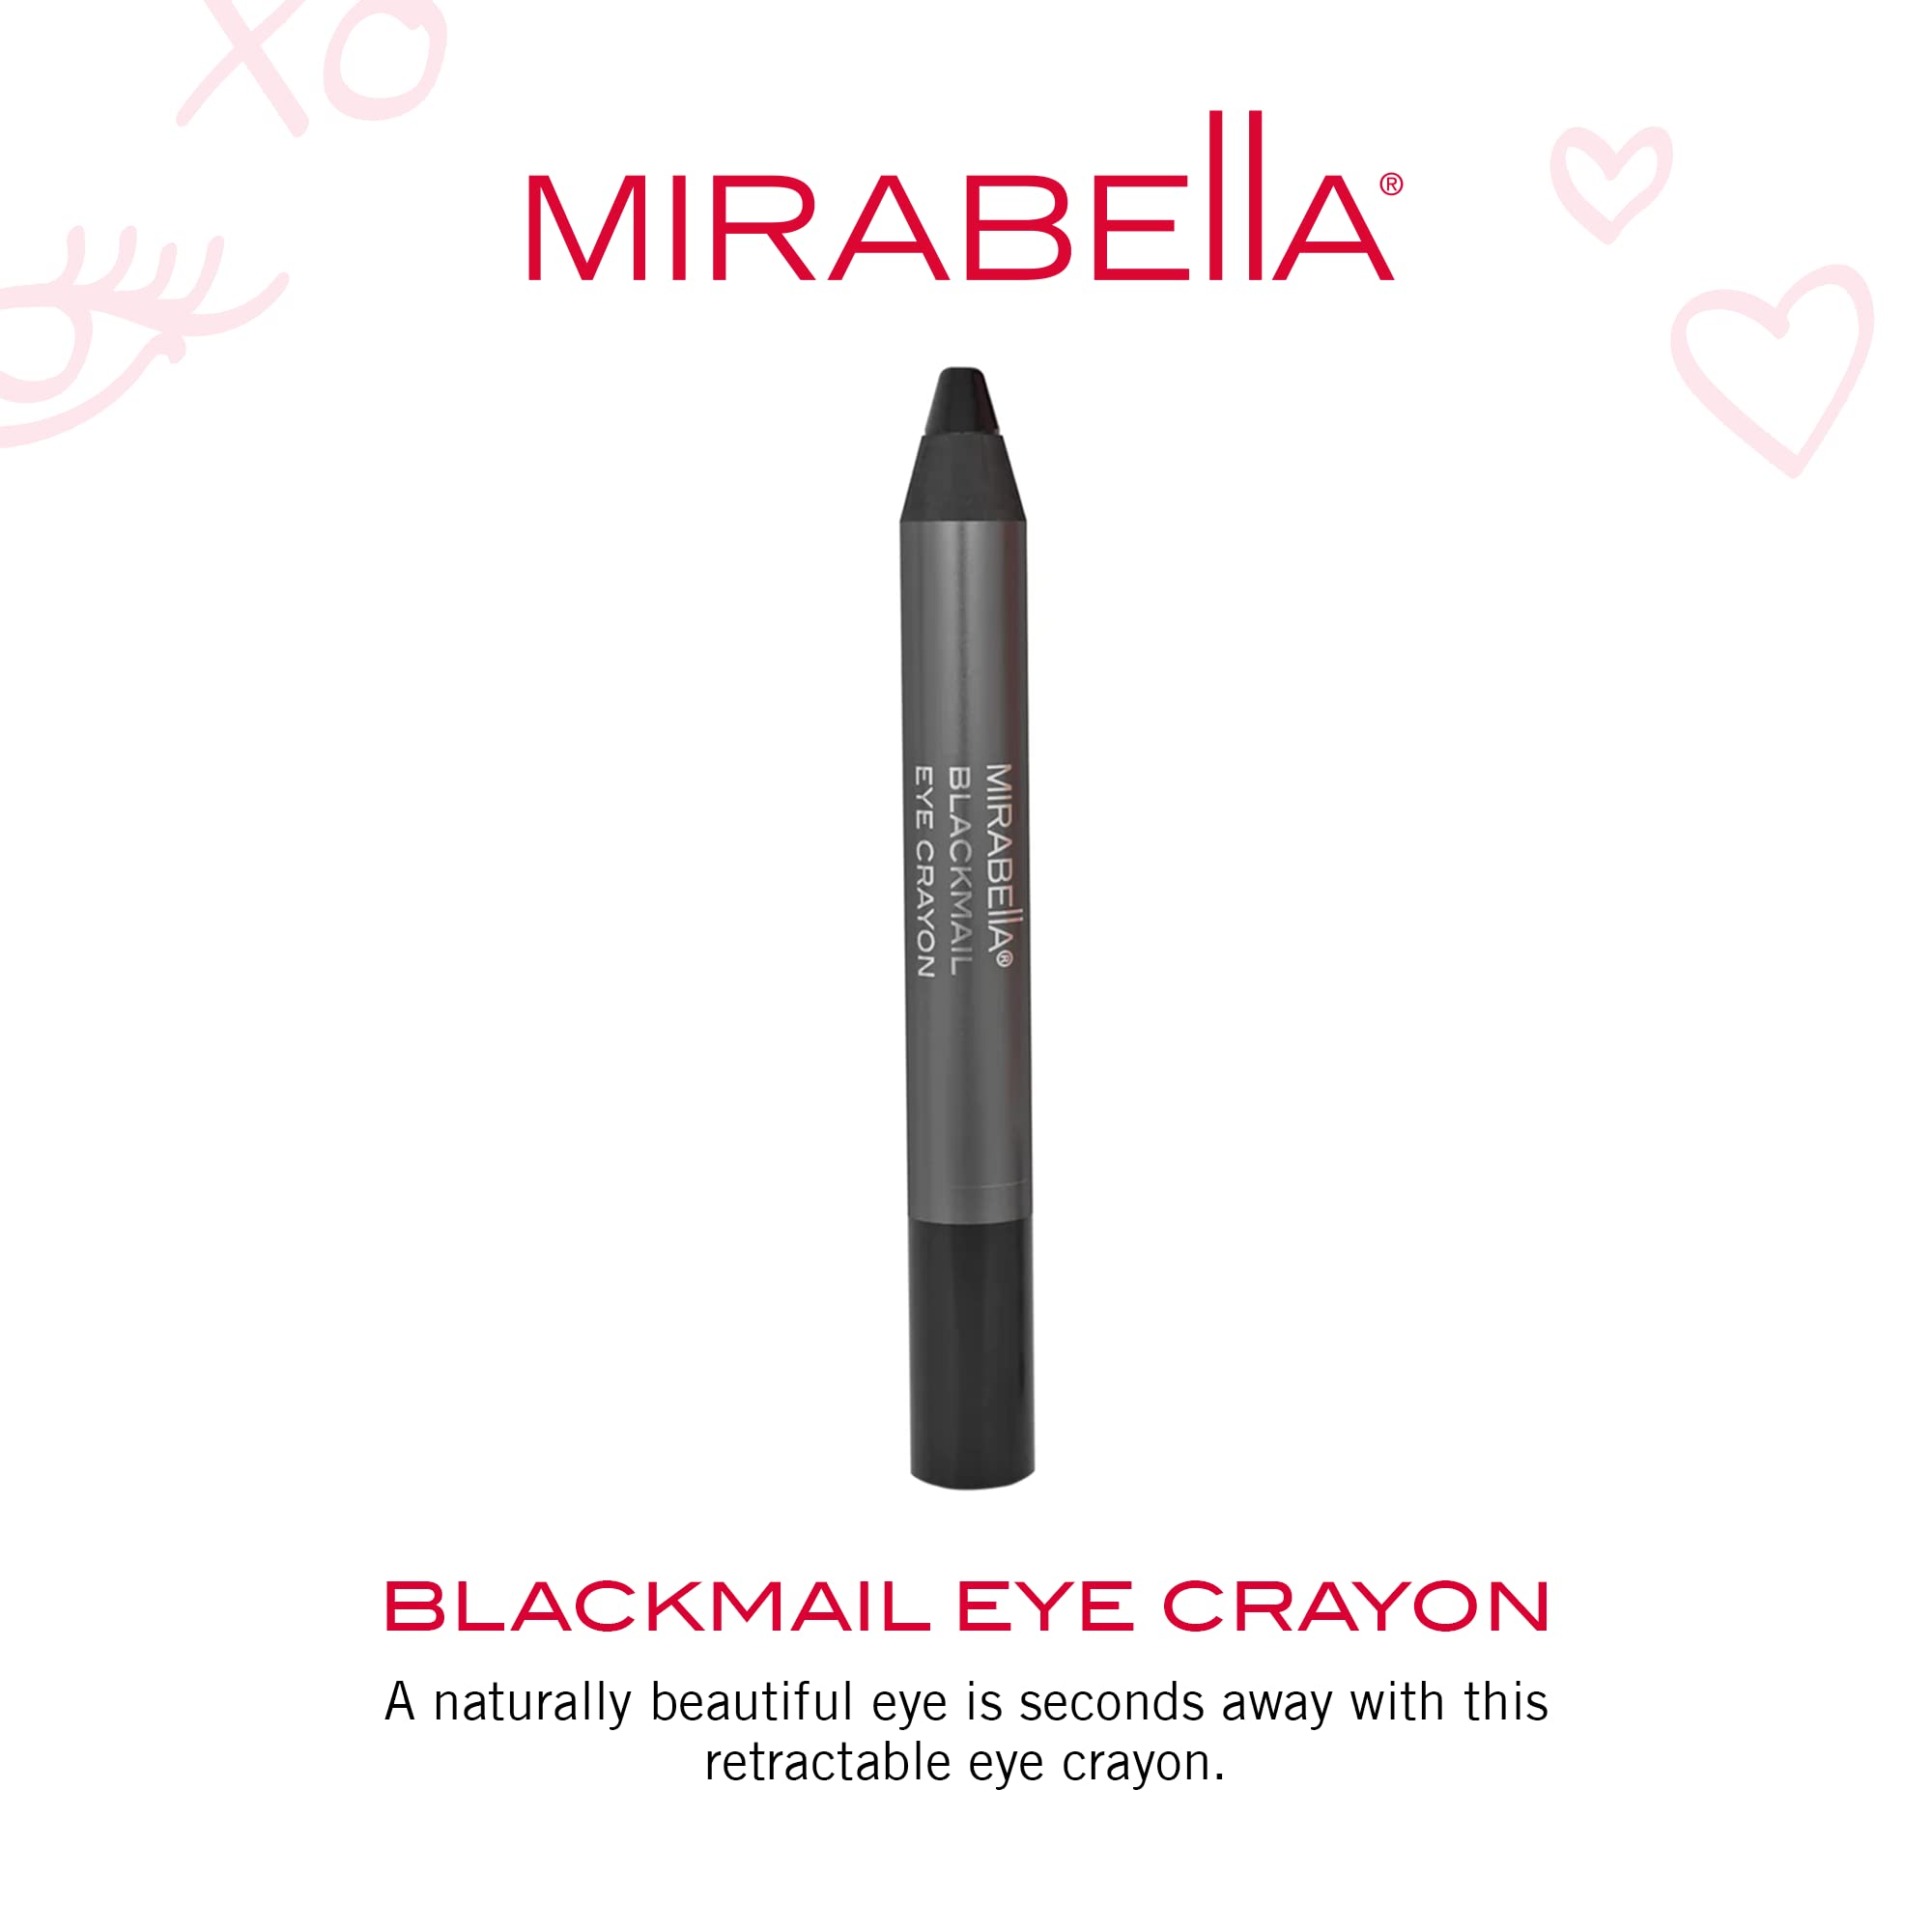 Mirabella Eye Crayon Jumbo Eyeliner, Blackmail (Black) - Smooth Formula Glides and Blends Effortlessly - Waterproof, Ultra-Creamy and High-Pigmented Formula - Paraben & Gluten-free